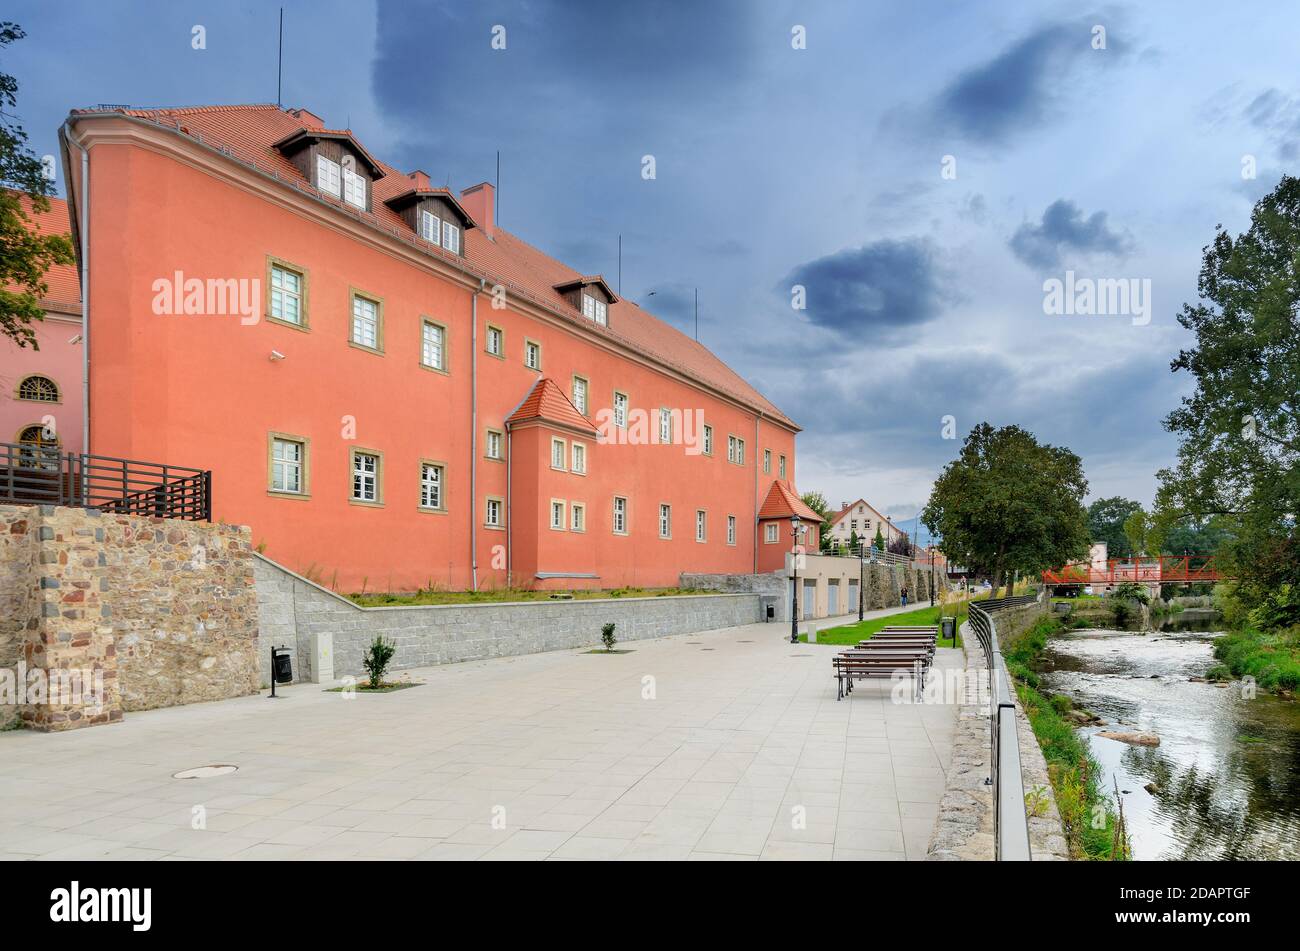 Natural museum building, Kamienna riverbank. Spa district Cieplice Slaskie-Zdroj, City of Jelenia Gora, (ger.: Hirschberg im Riesengebirge). Stock Photo